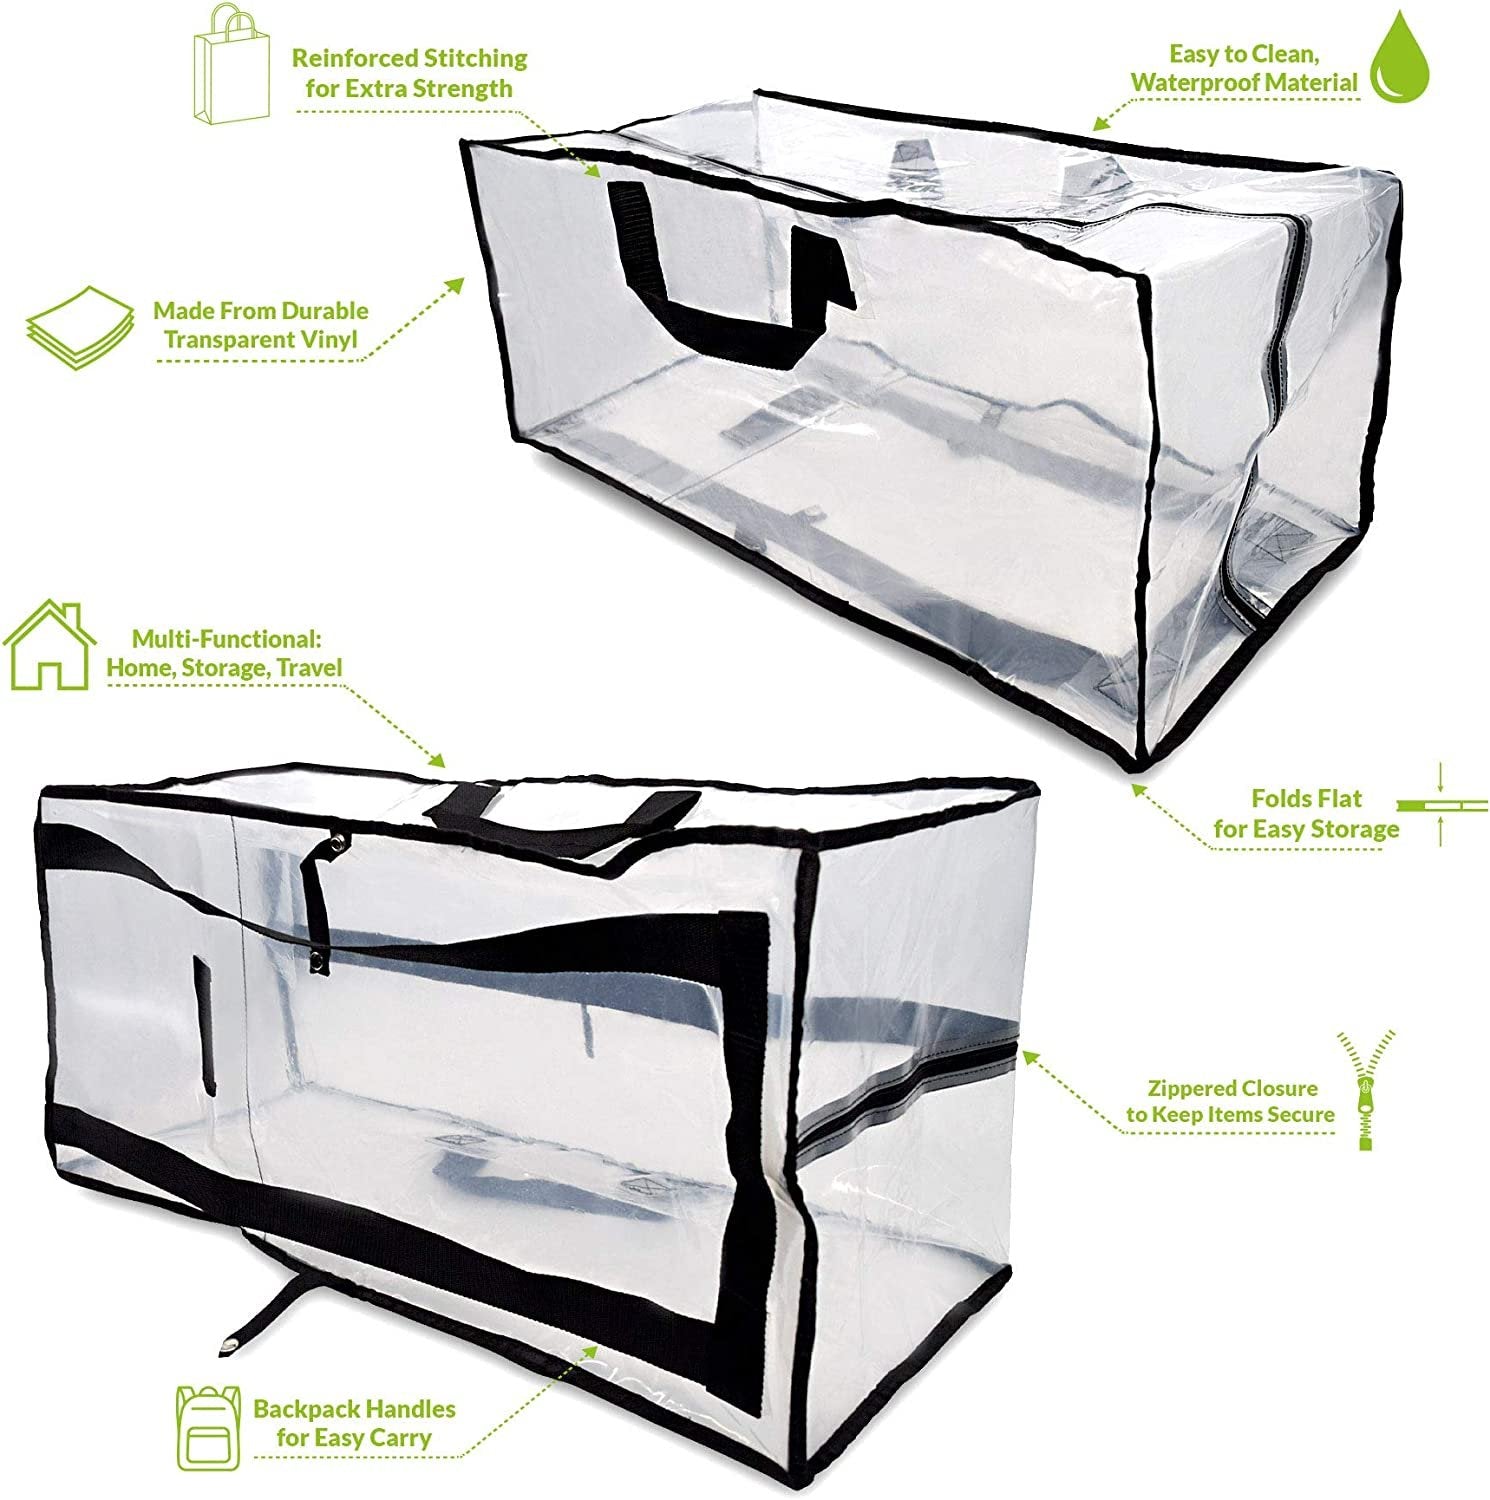 Big Capacity Jumbo Waterproof Plastic Bags Zipper Reusable Strong